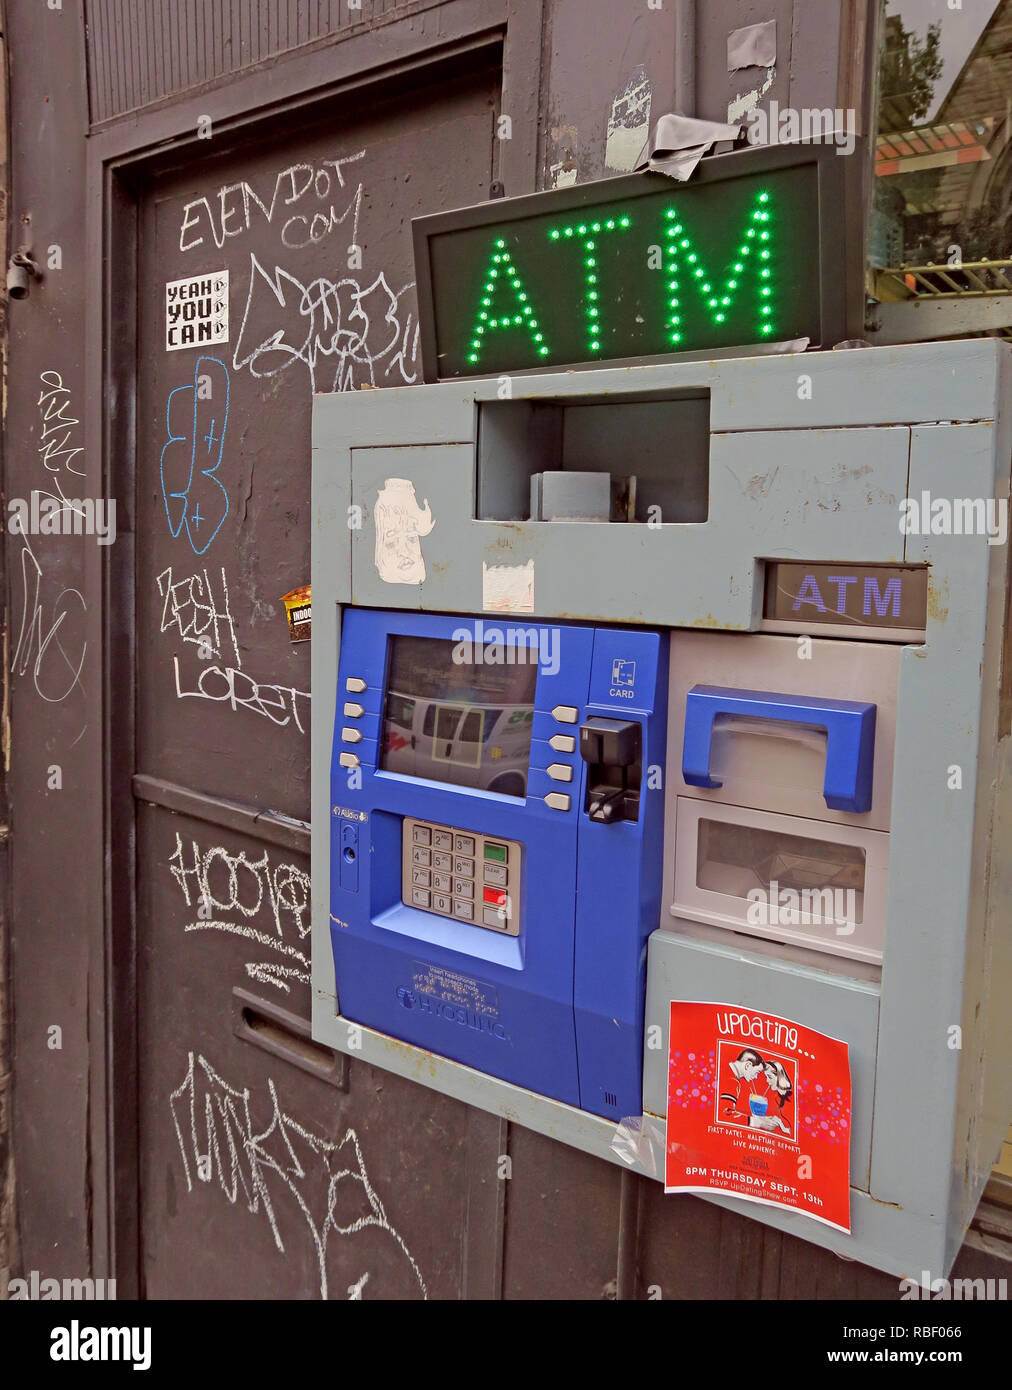 Noi Street ATM, Hyosung ATM, Saint segna posto, East Village, Manhattan, New York, New York, NY, STATI UNITI D'AMERICA Foto Stock